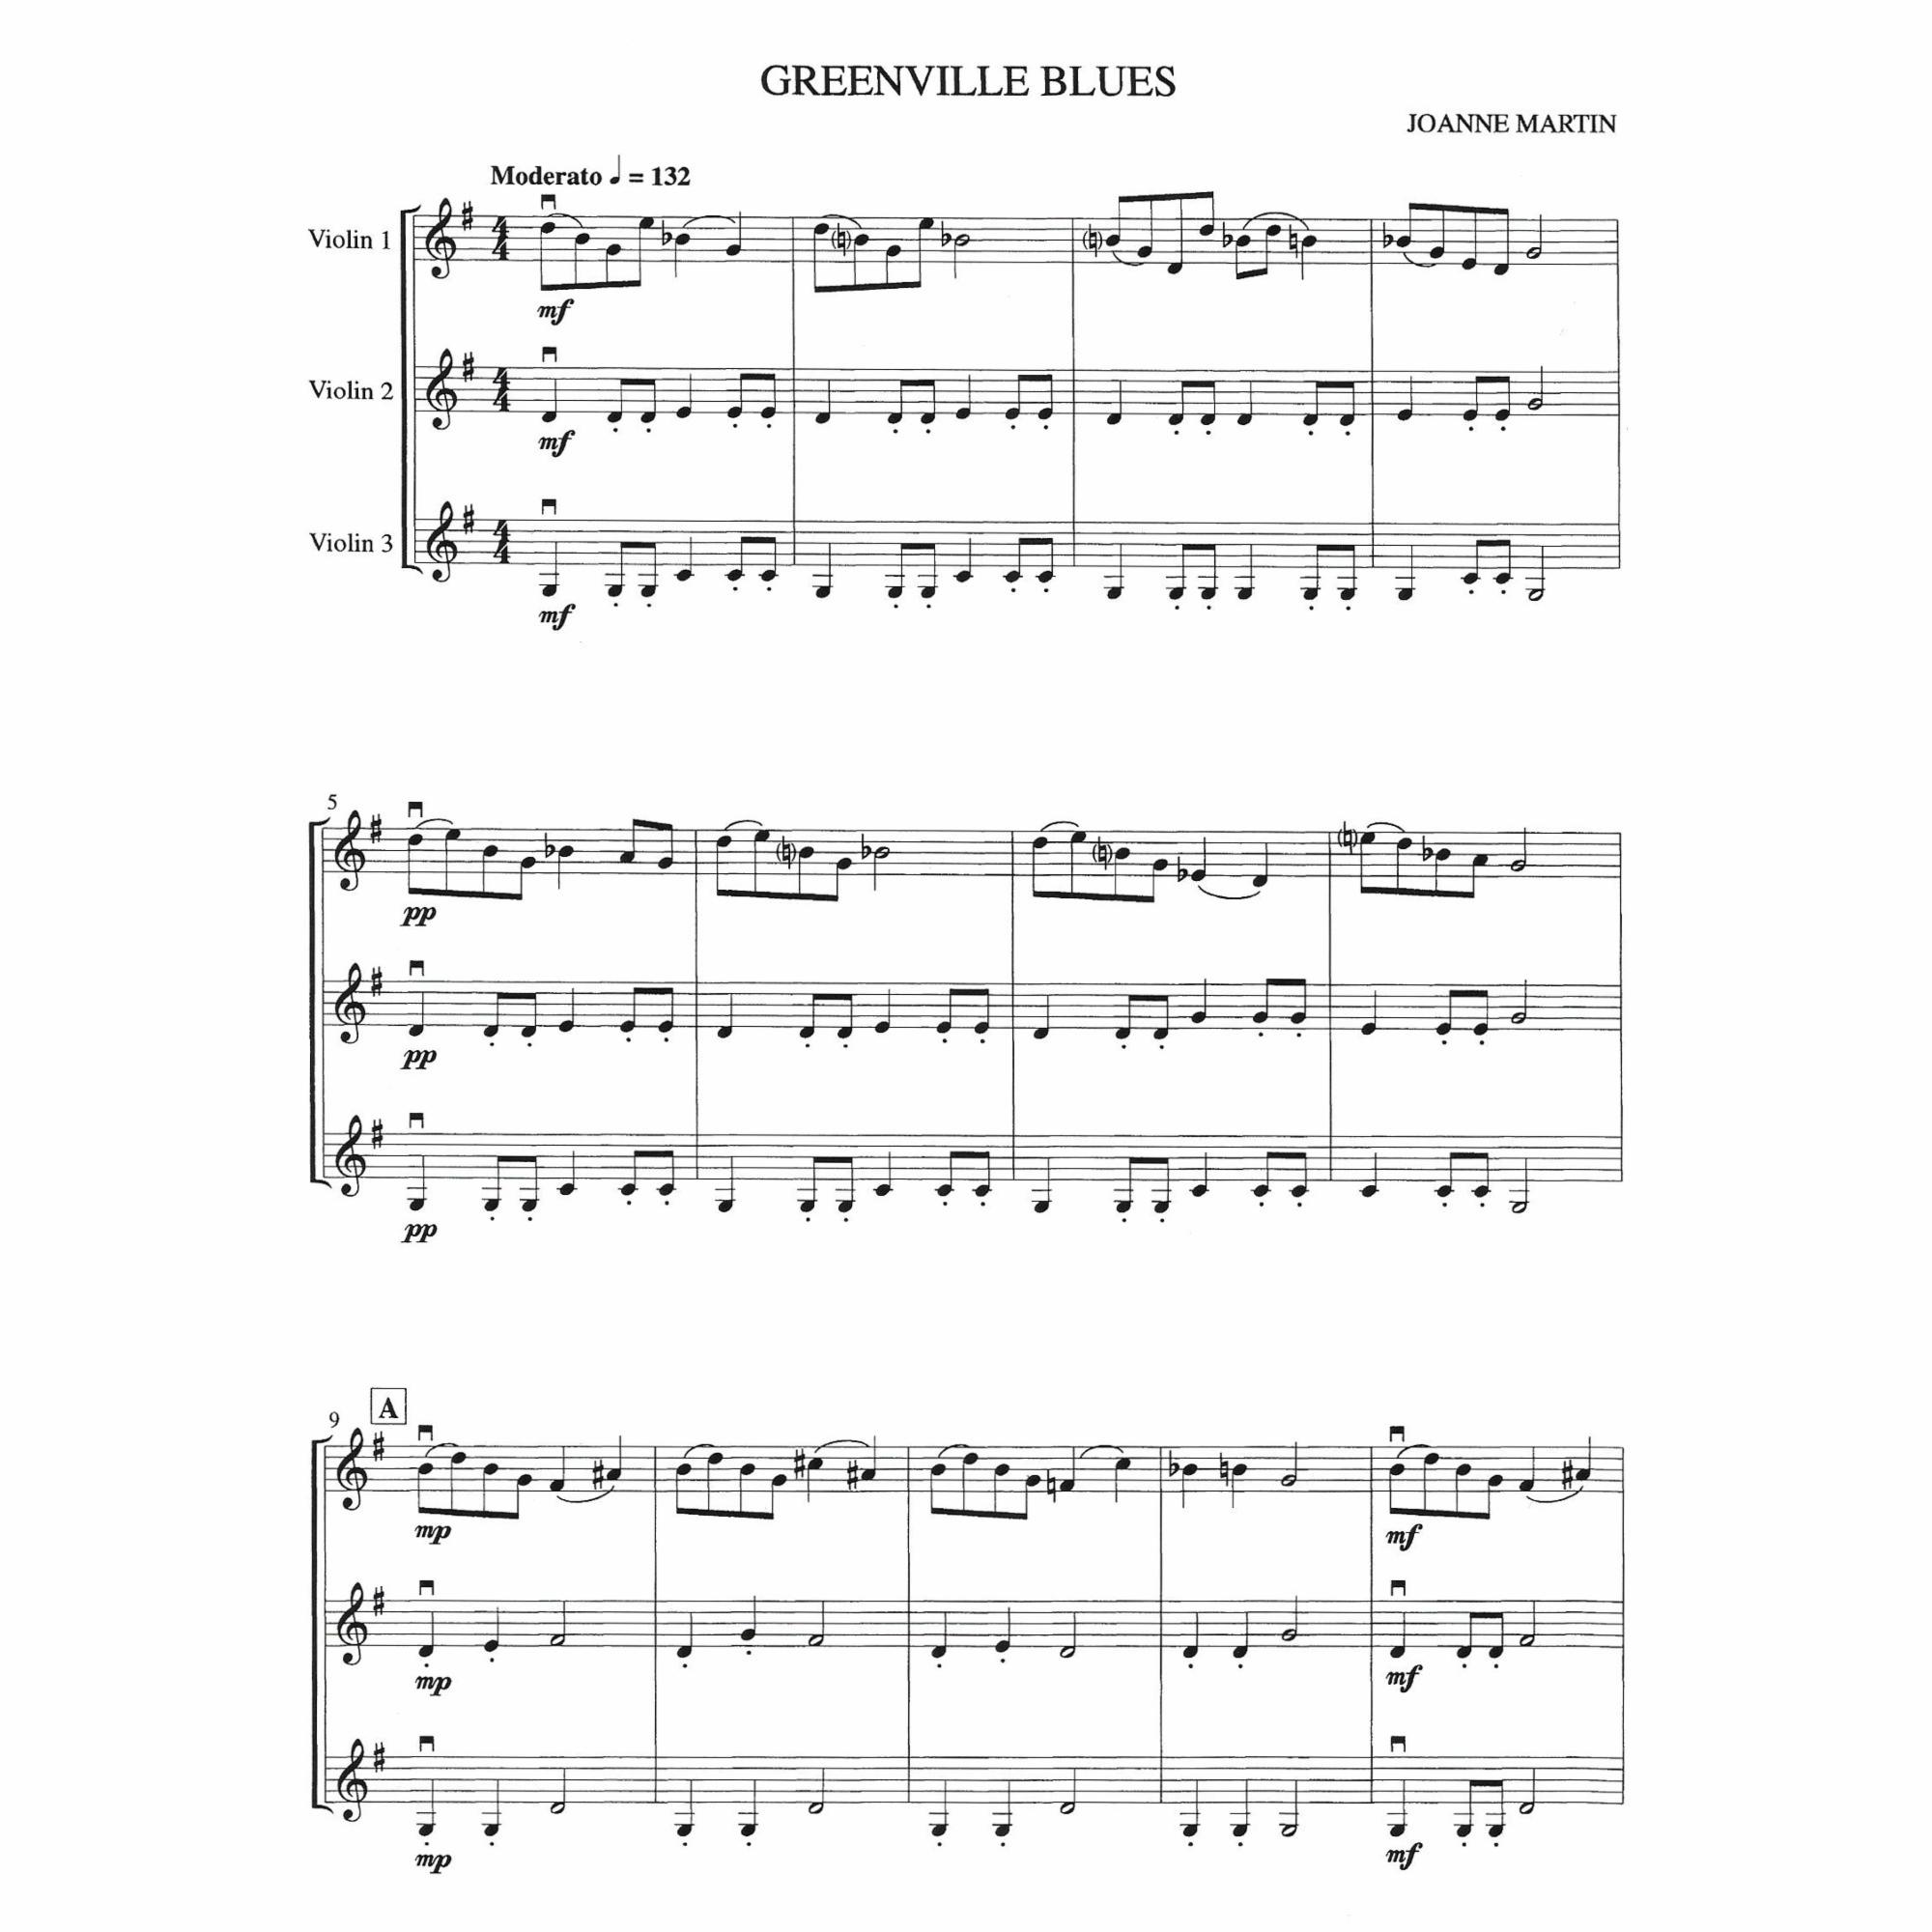 Sample: Three Violins (Pg. 16)